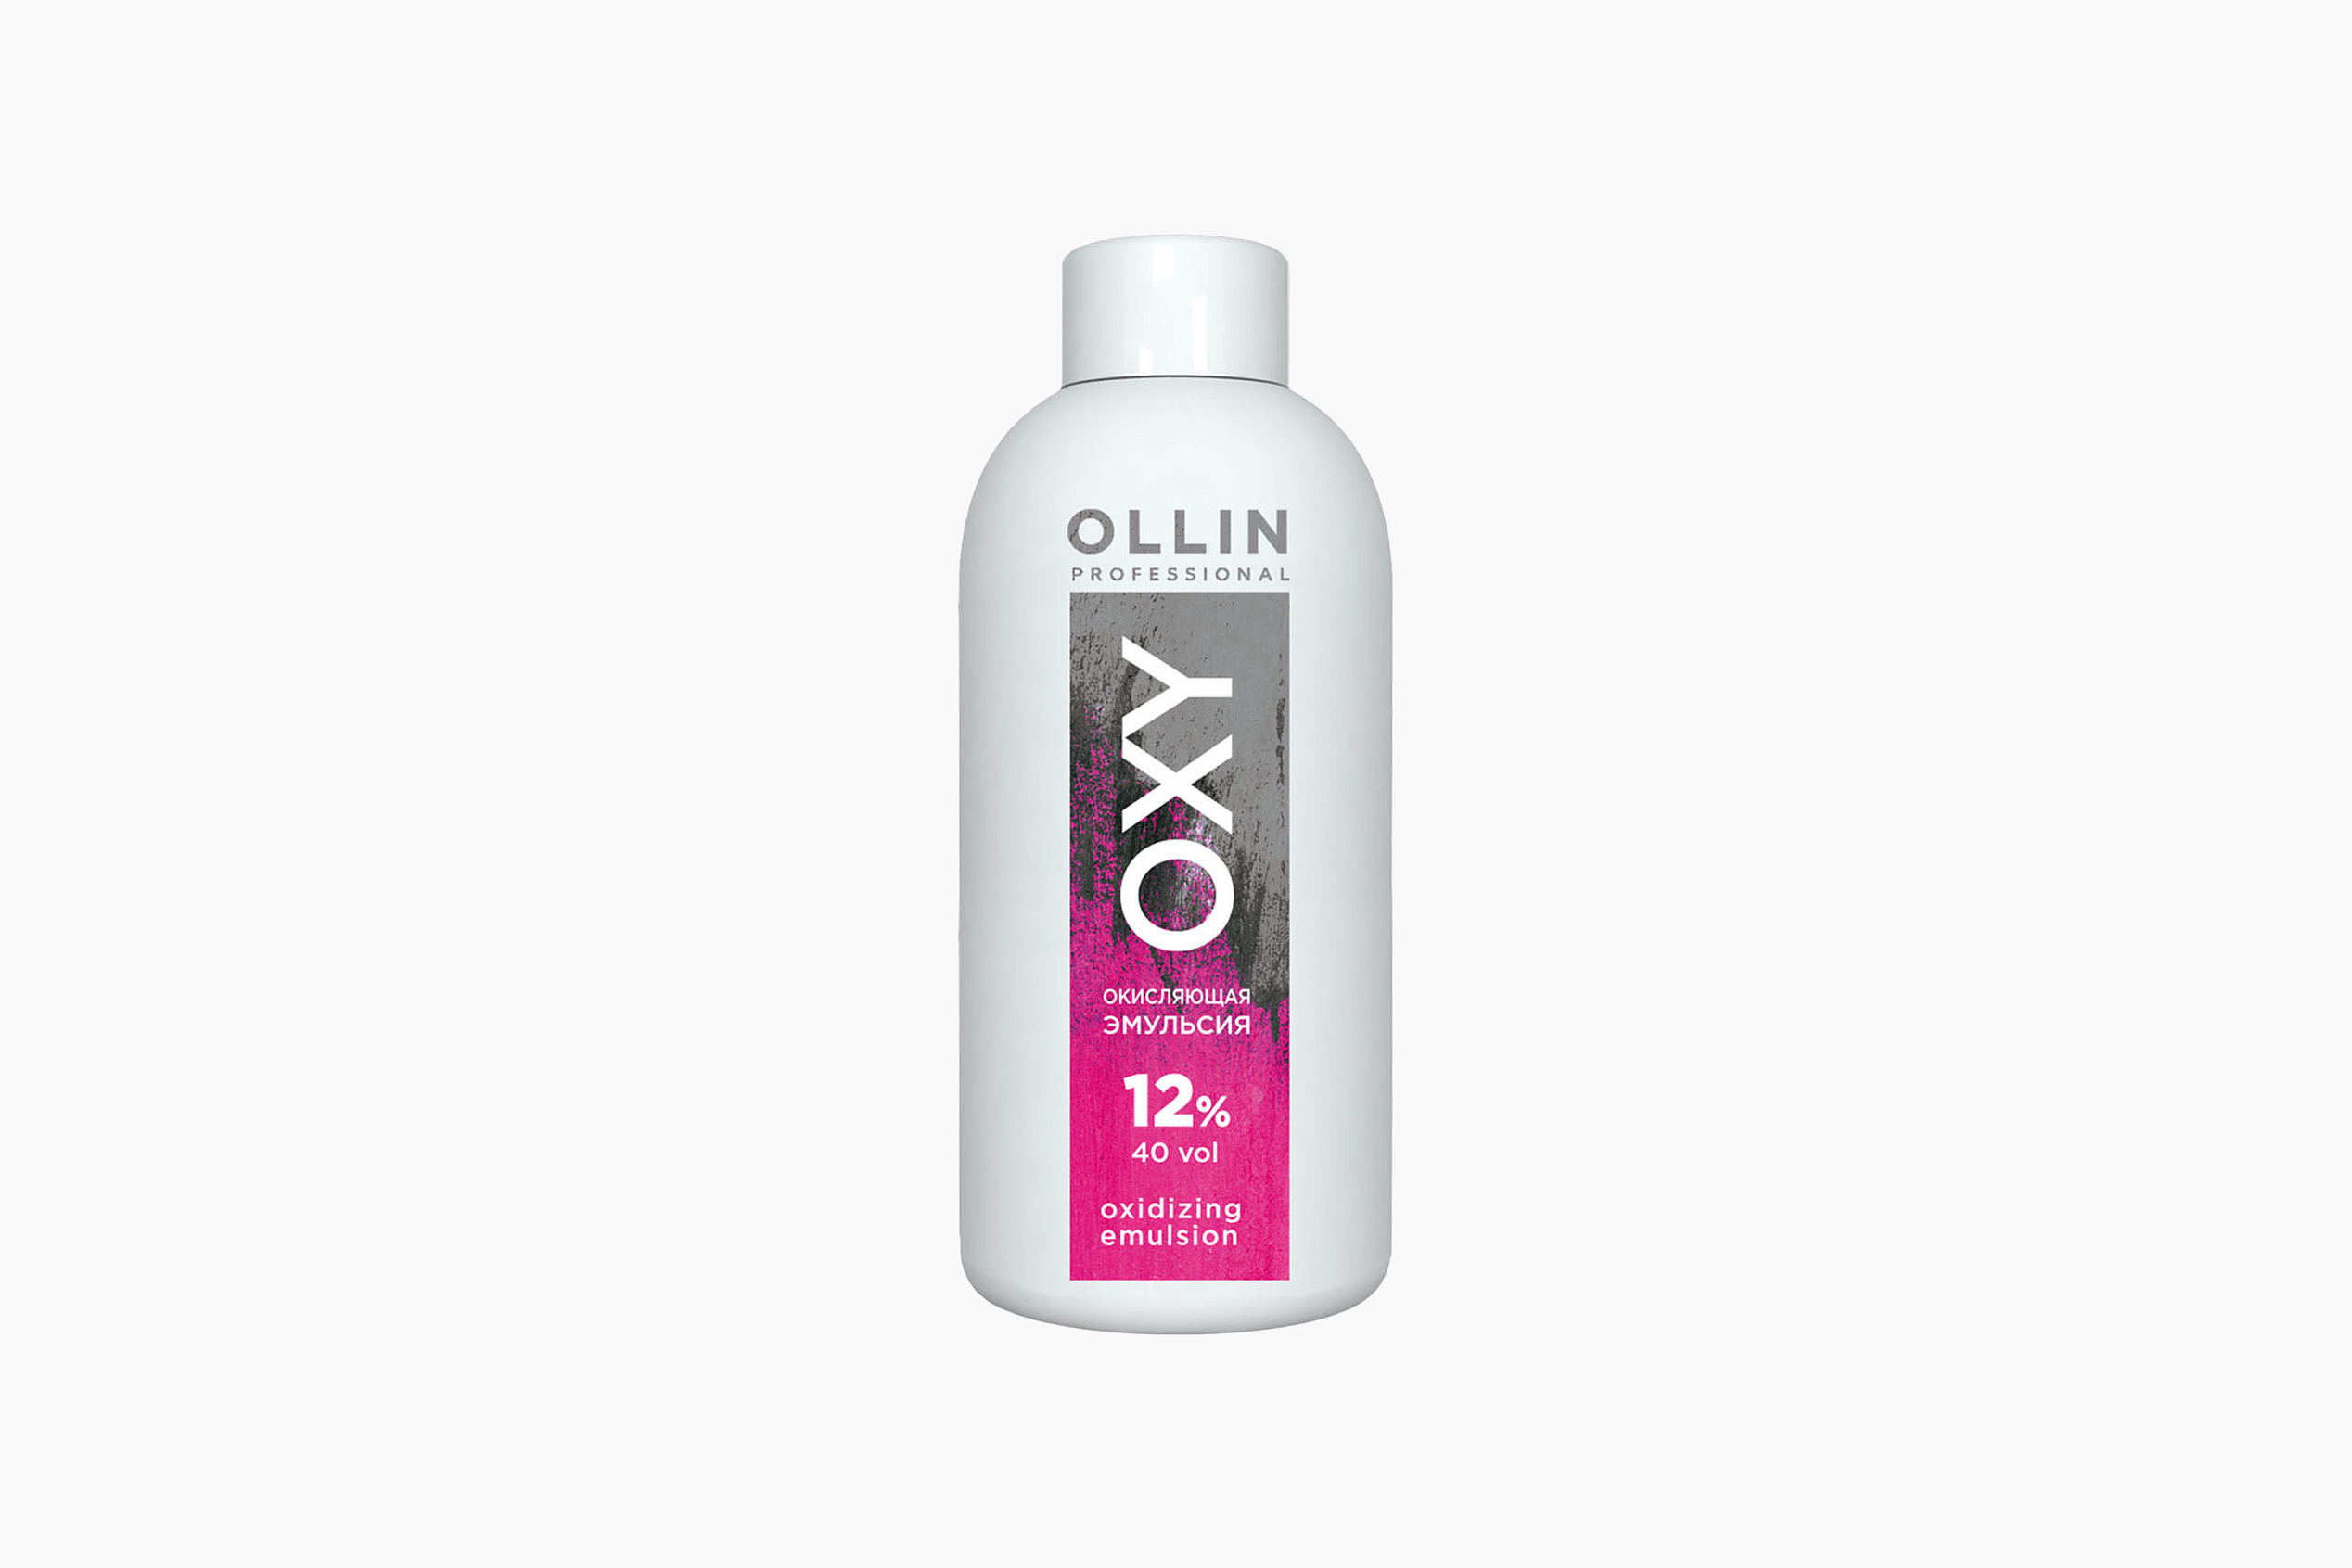 Ollin Professional Oxy 12% 40vol фото 1